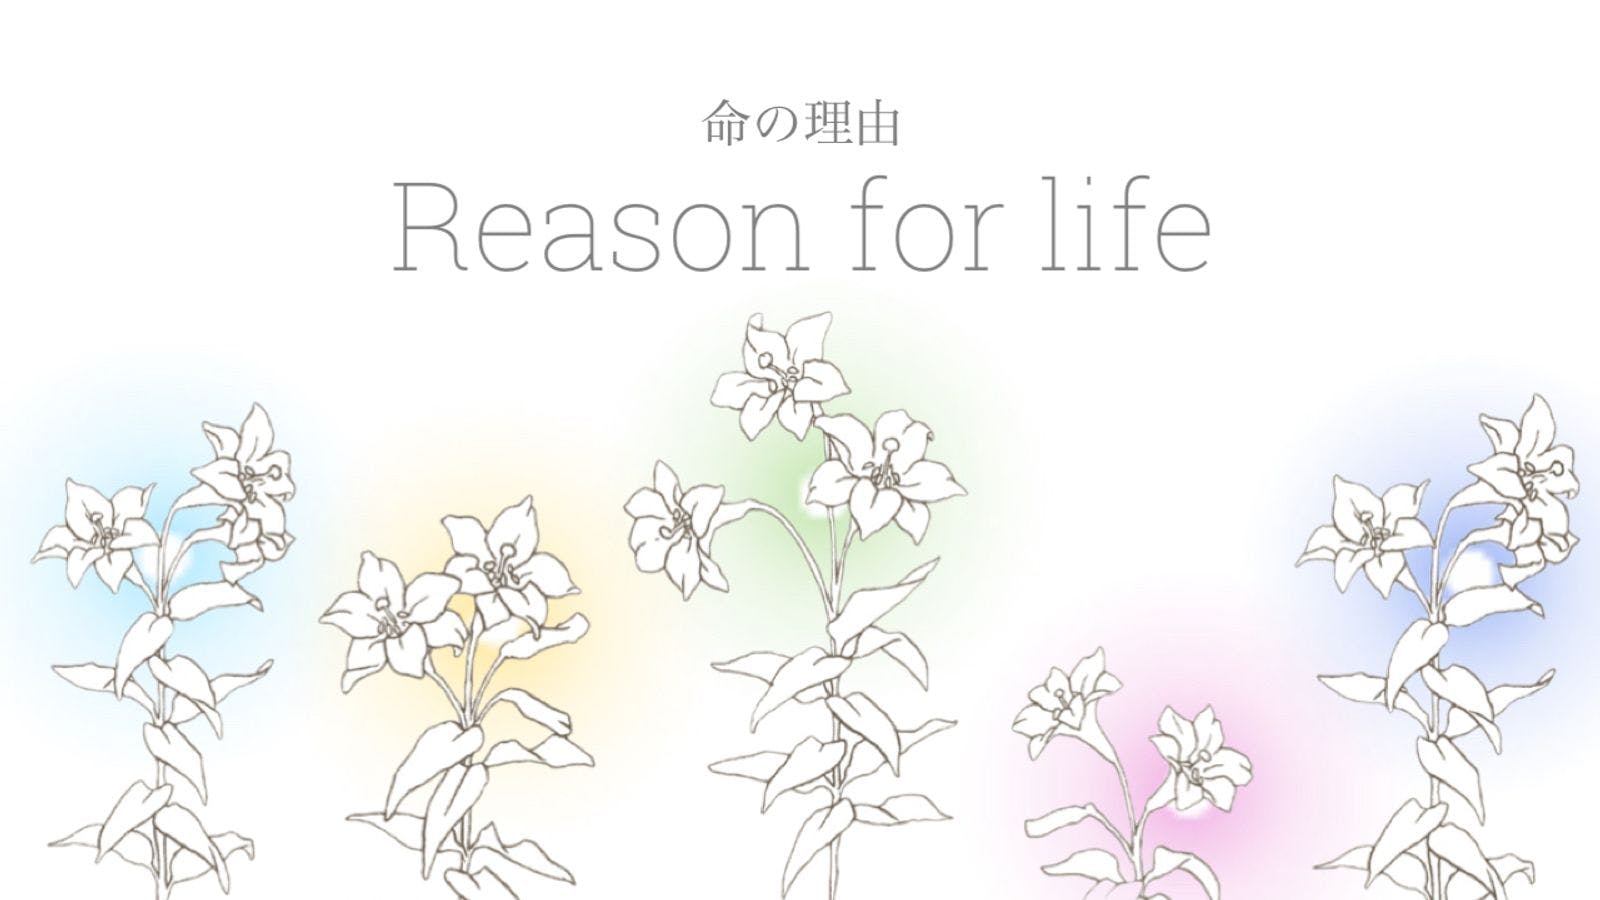 Reason for life -命の理由-